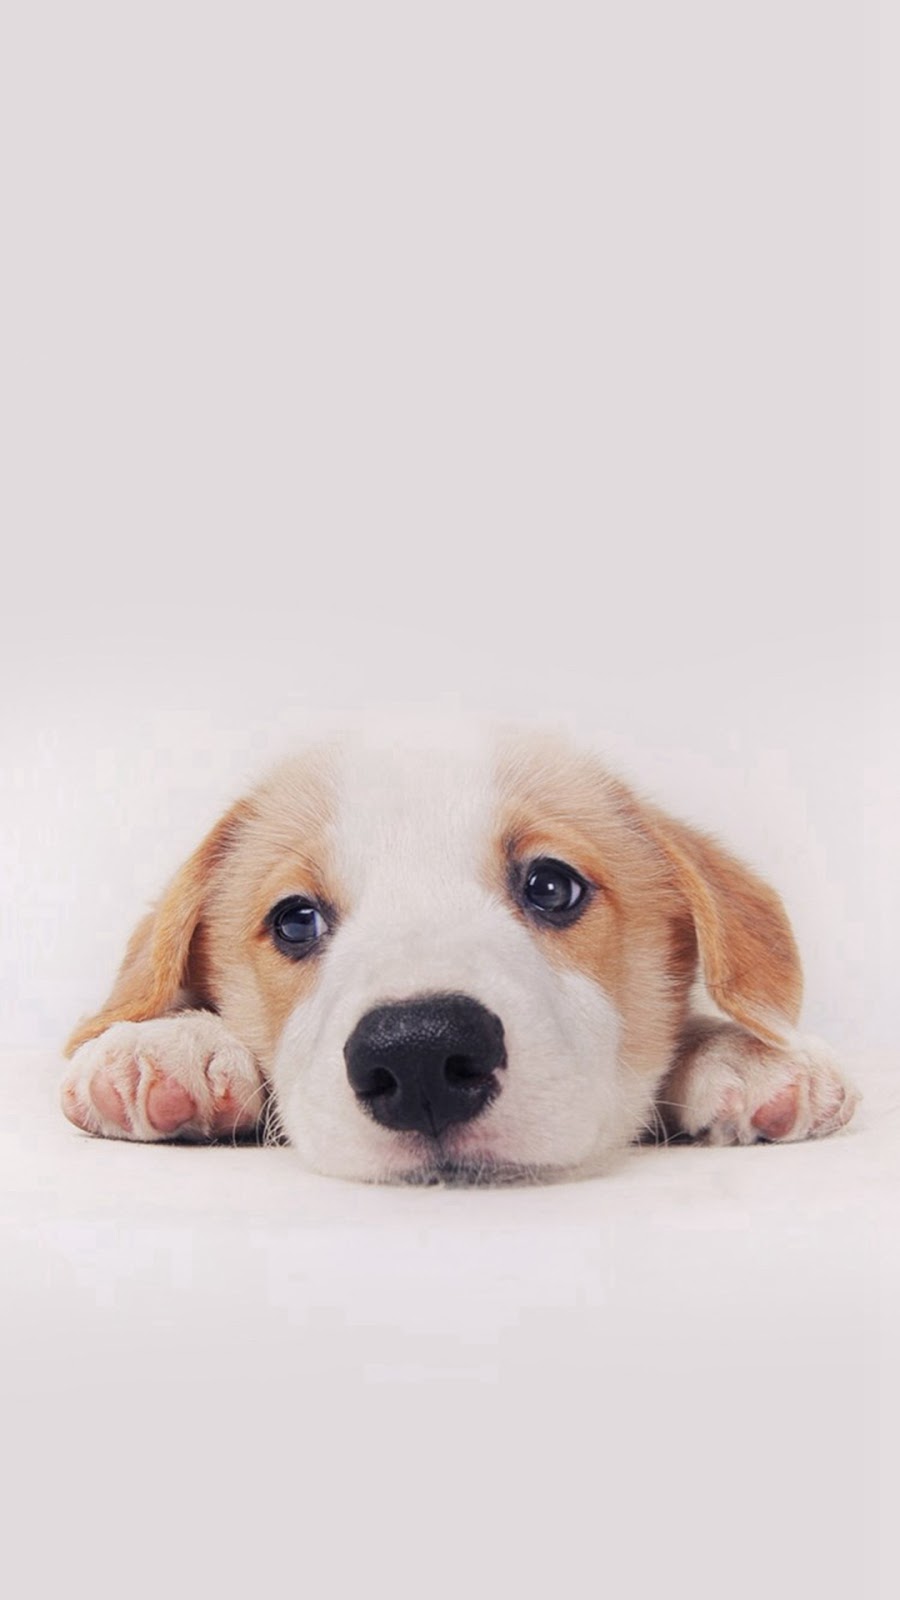 Cute Wallpapers For Iphone 6 - Cute Dog Wallpaper Iphone - HD Wallpaper 